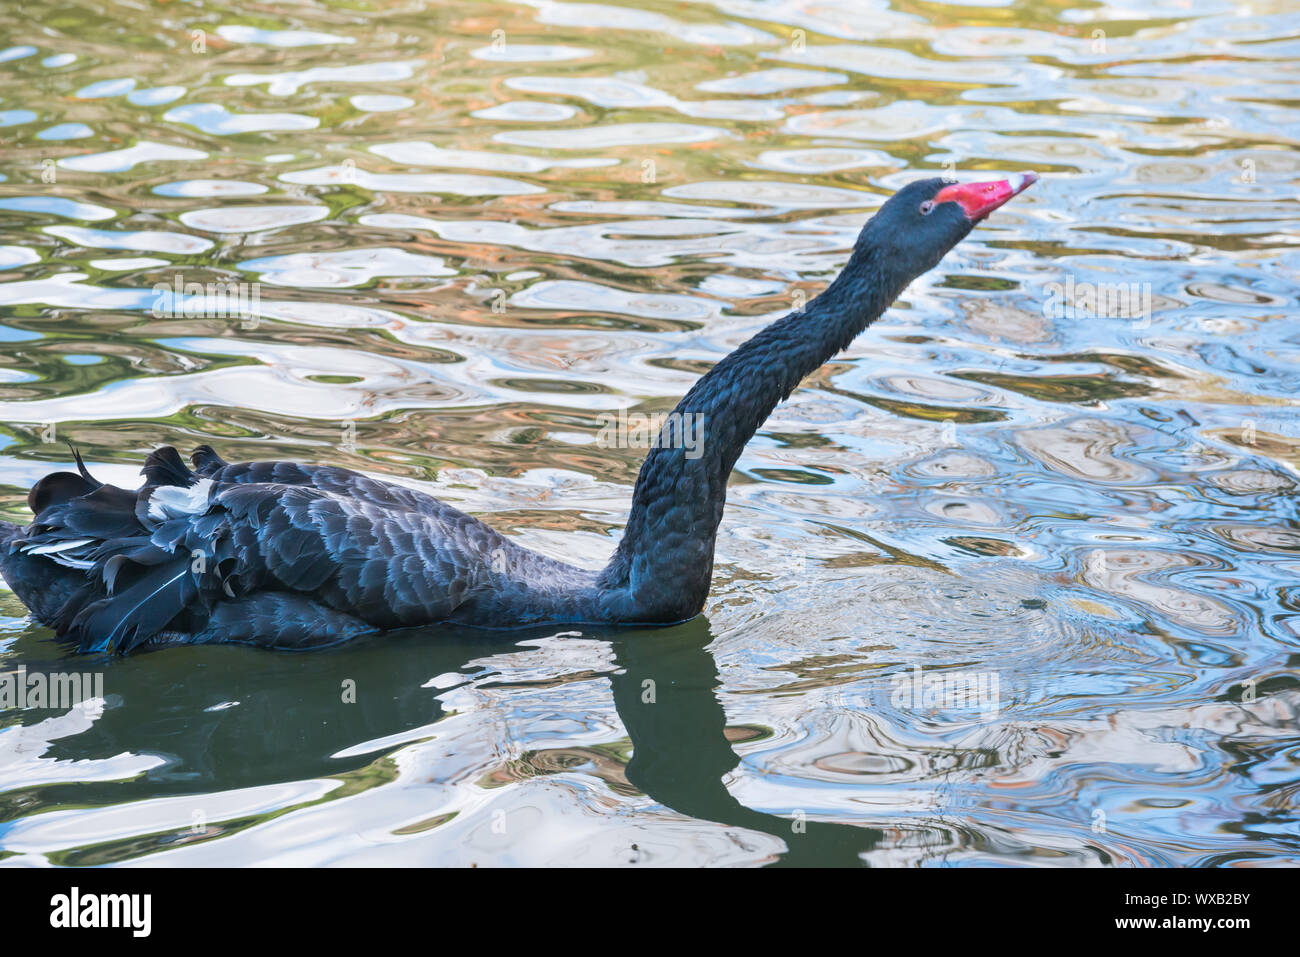 Black swan swimming in pond Stock Photo